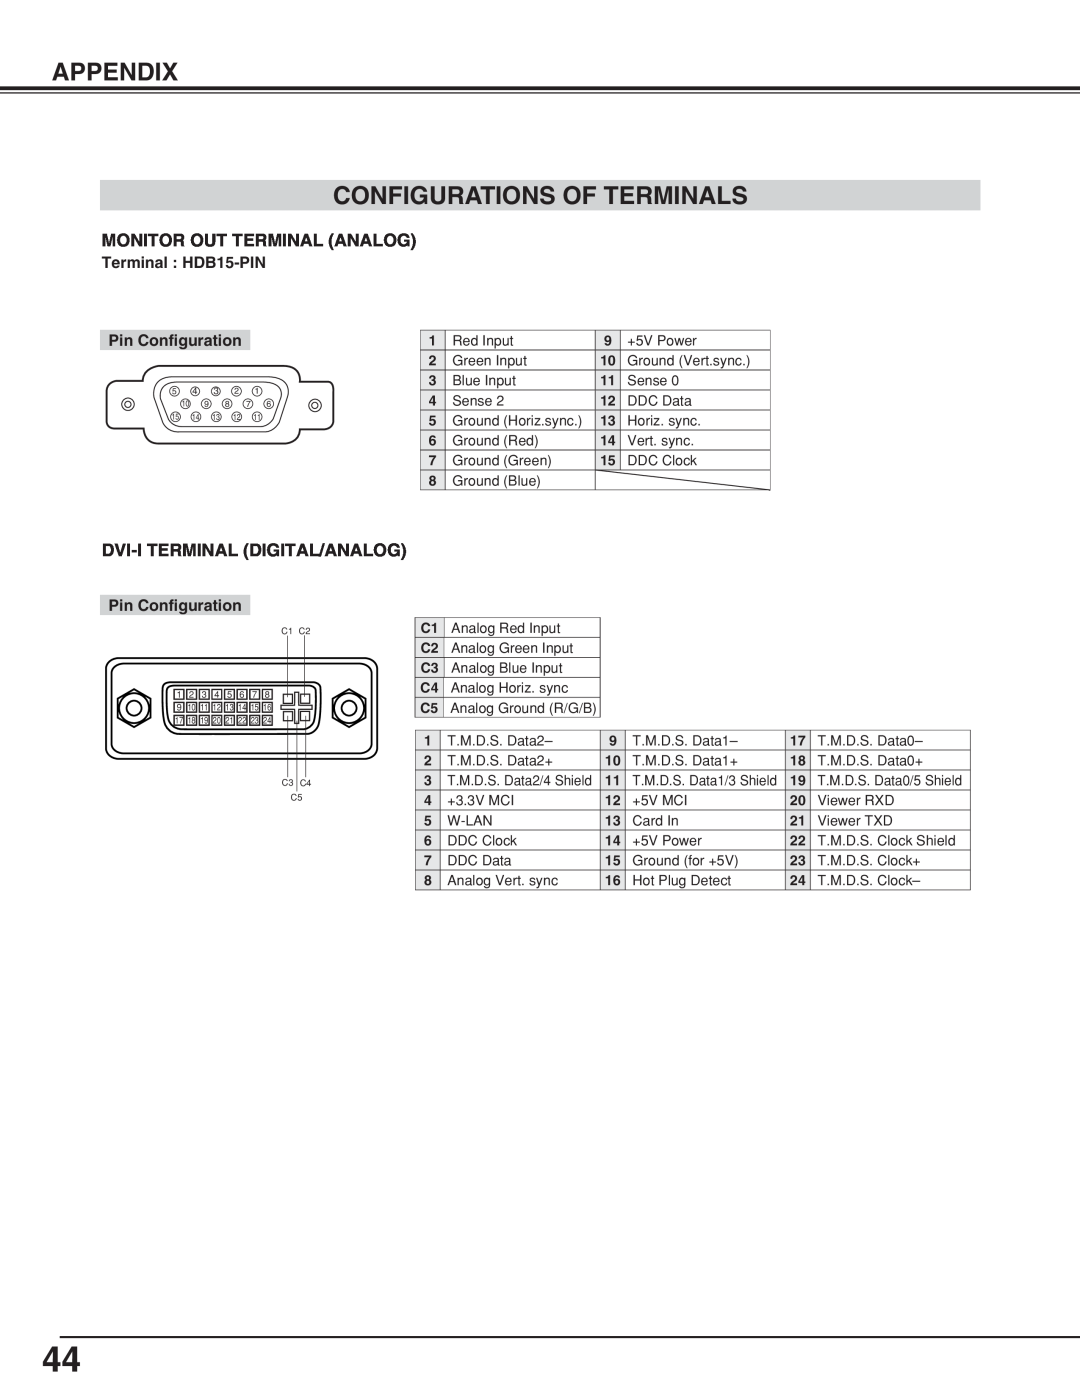 BOXLIGHT CP-18t manual Appendix Configurations Of Terminals, Monitor Out Terminal Analog, Dvi-I Terminal Digital/Analog 